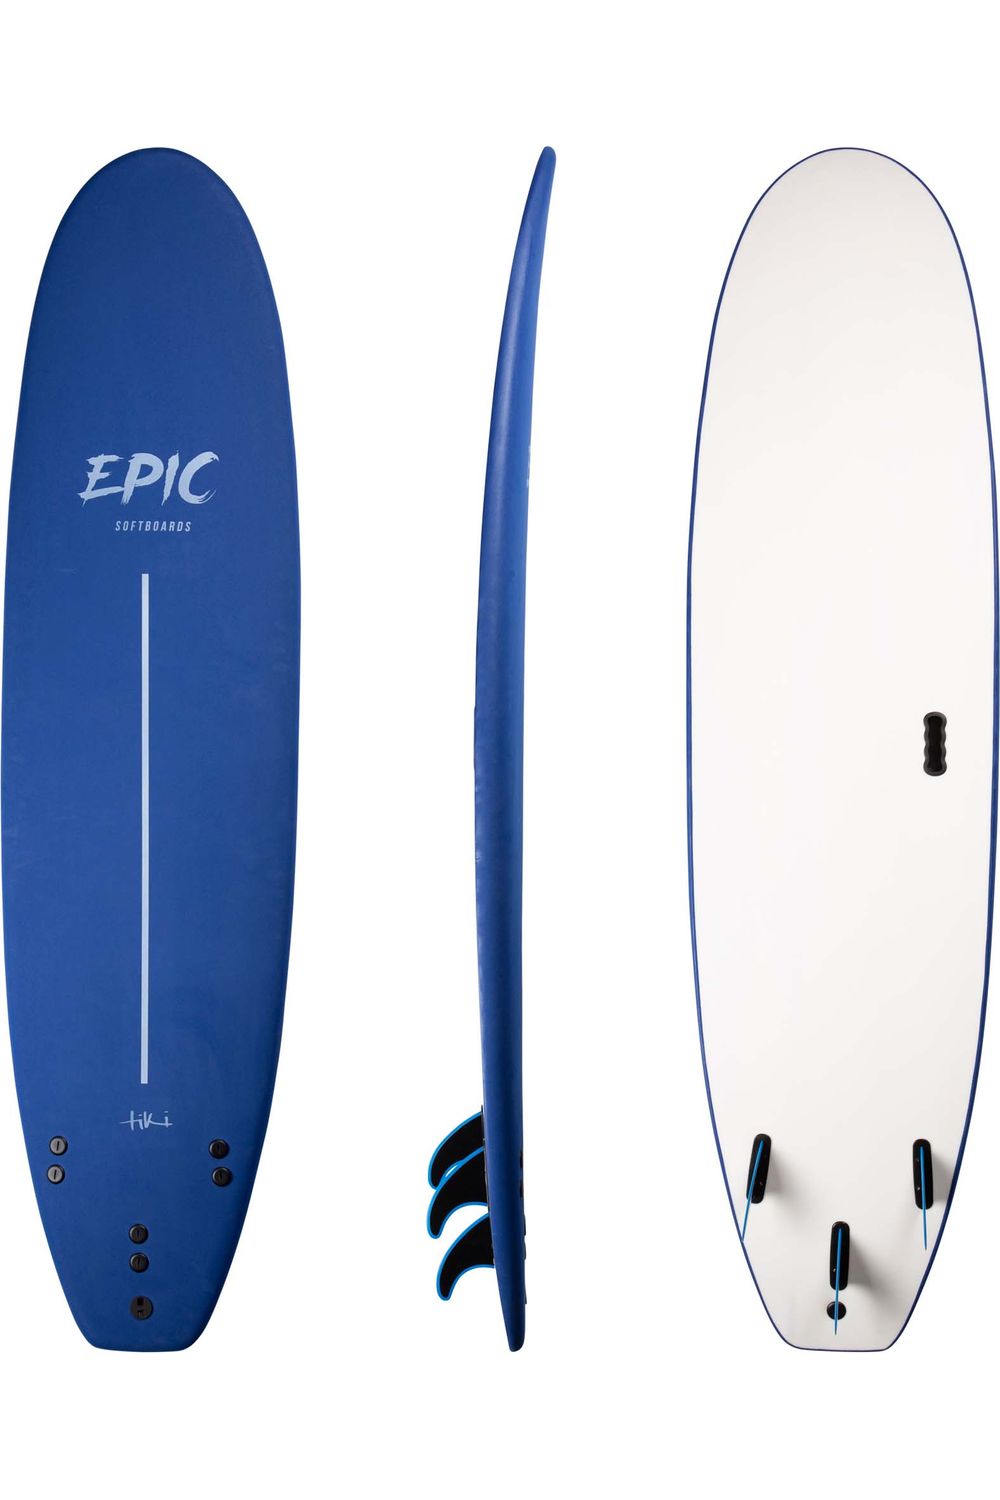 Tiki Epic 7'6 Softboard Bundle Deal Blue